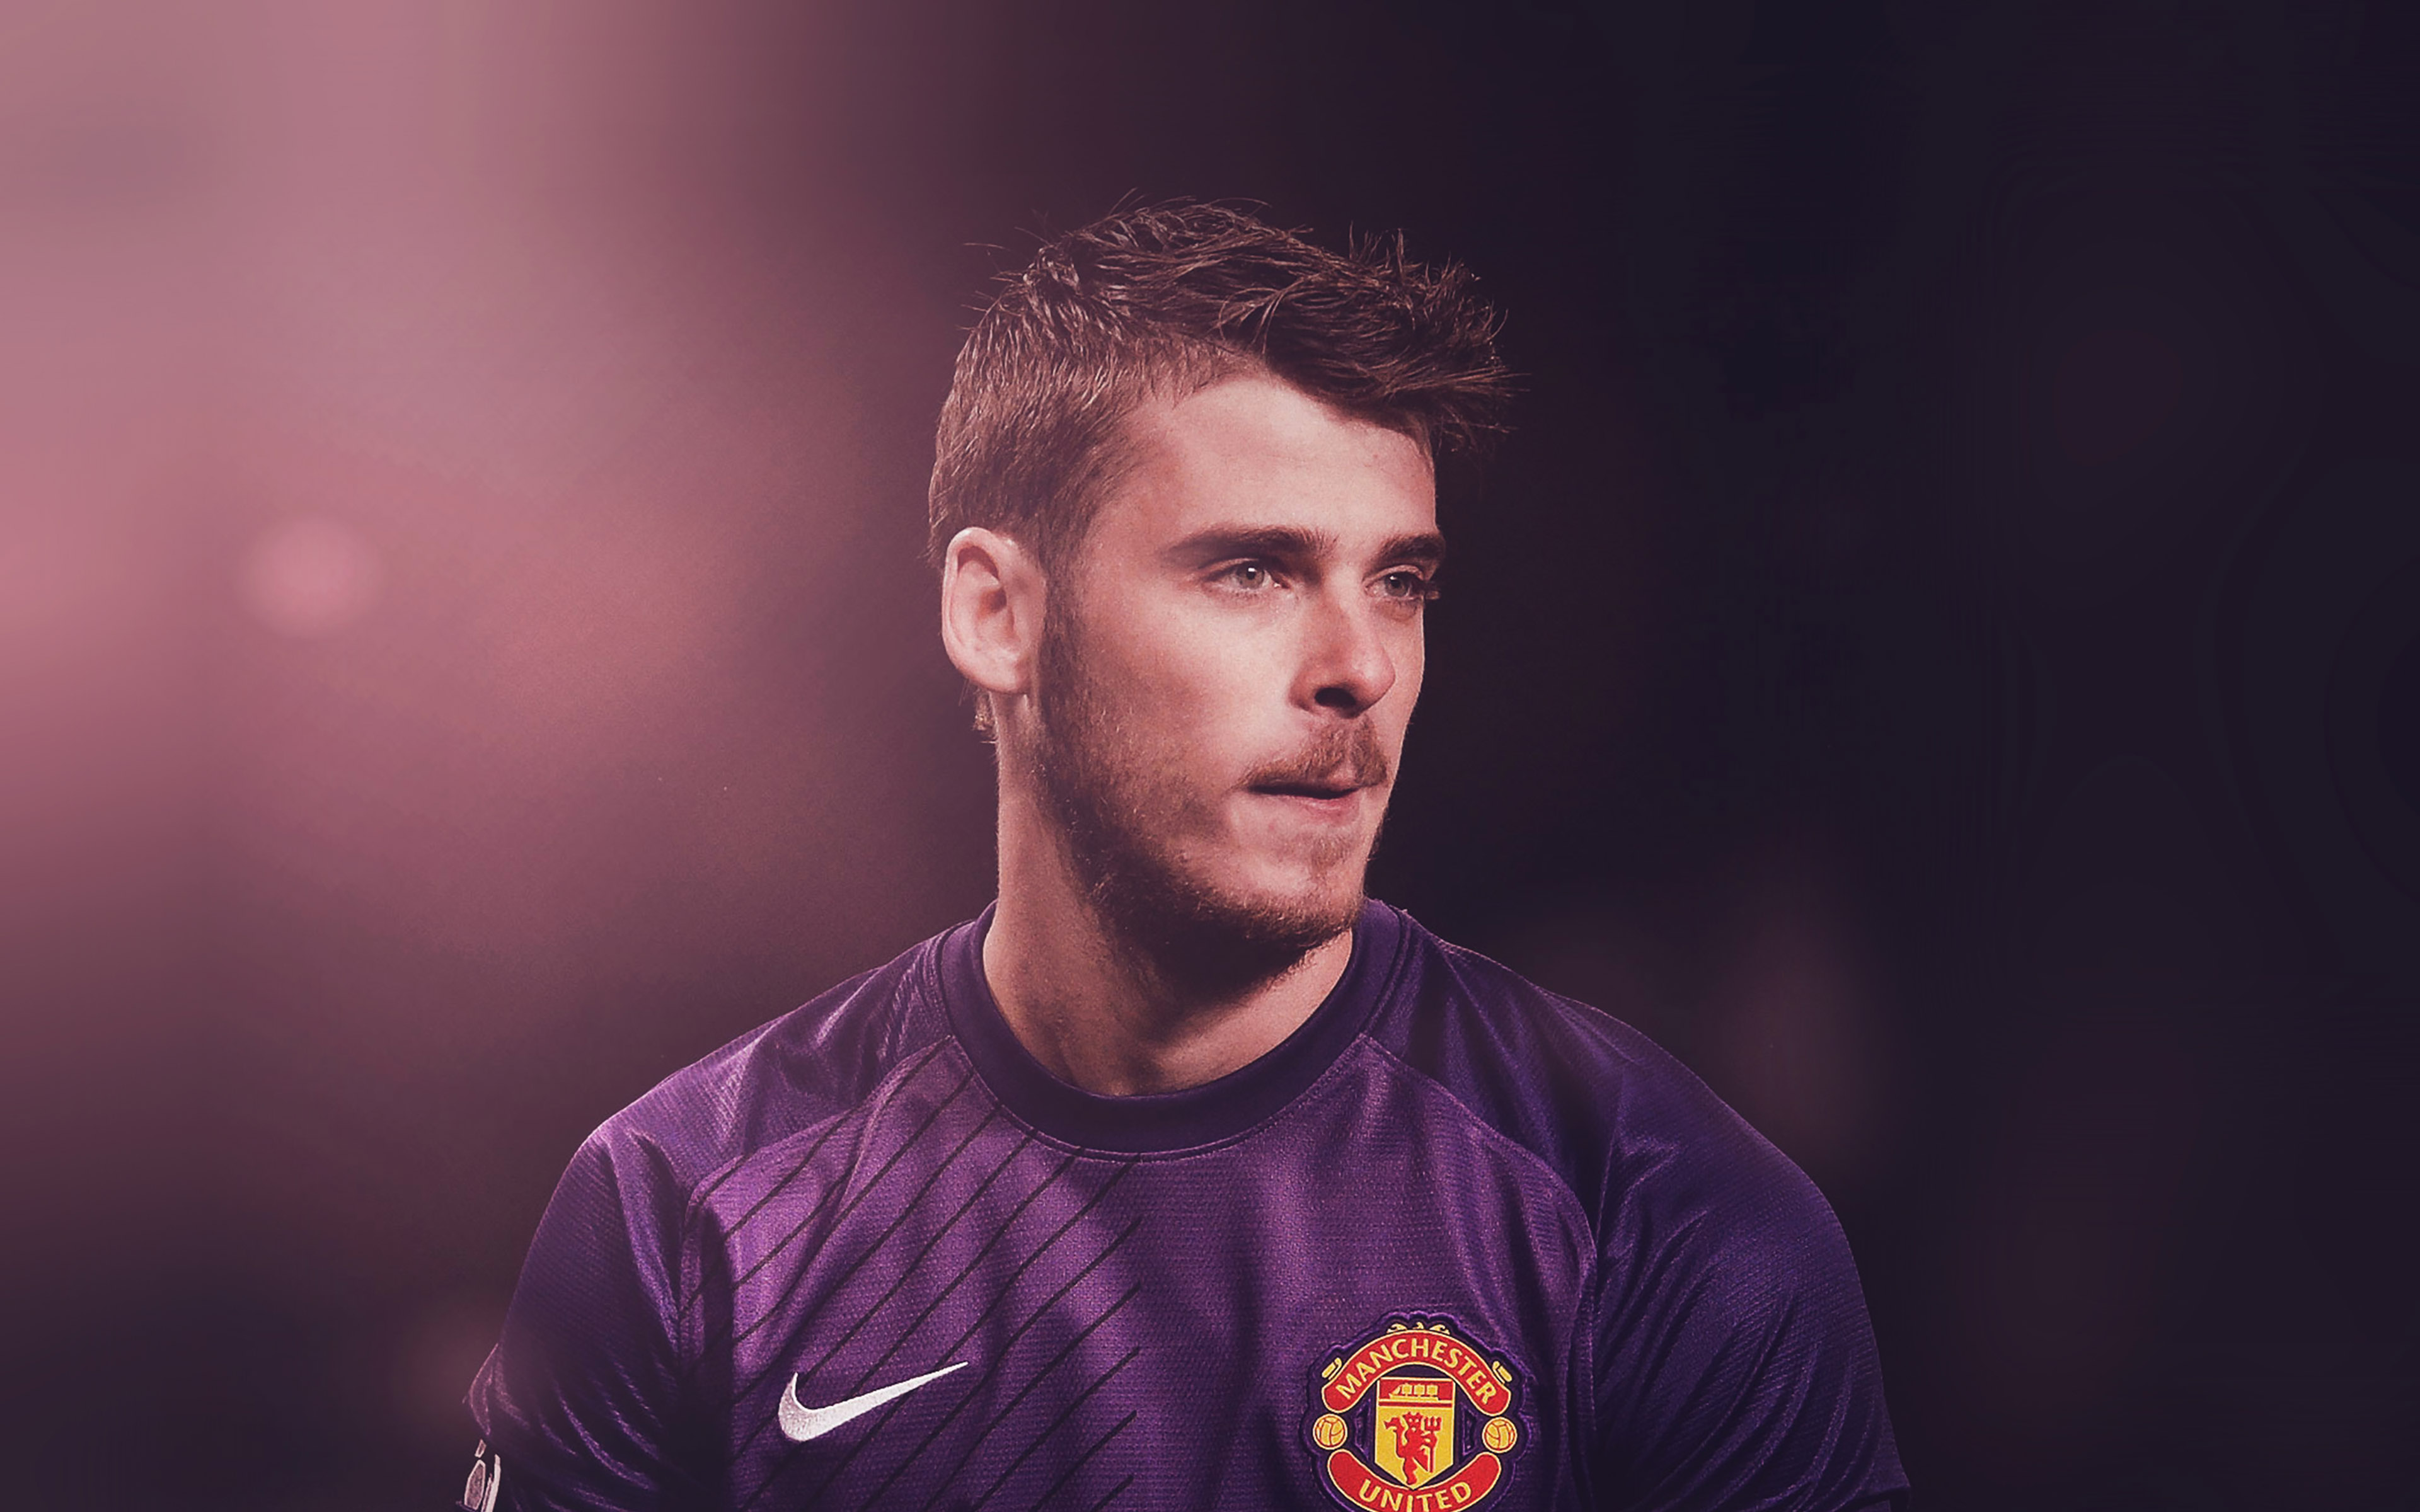 Manchester United - HD Wallpaper 